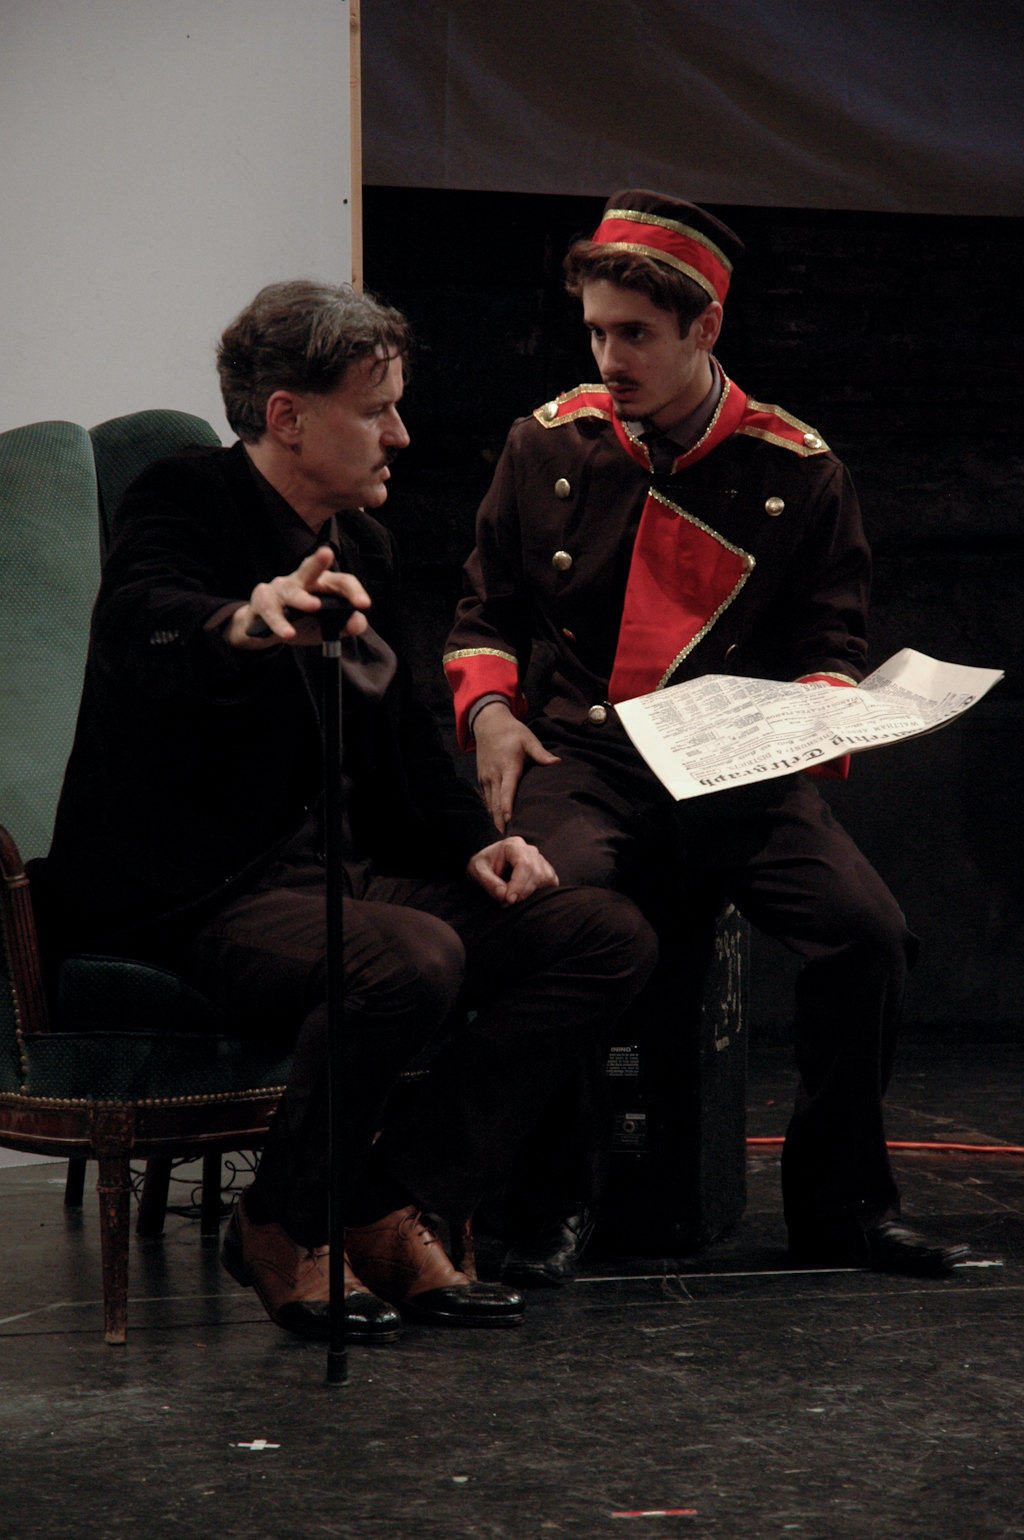 Jack Dimich as Nikola Tesla and Luka Mijatovic as Luka in TESLA, written by Sheri Graubert, directed by Sanja Bestic. Theatre 80 St. Marks, New York. May 23rd thru June 8th 2013.